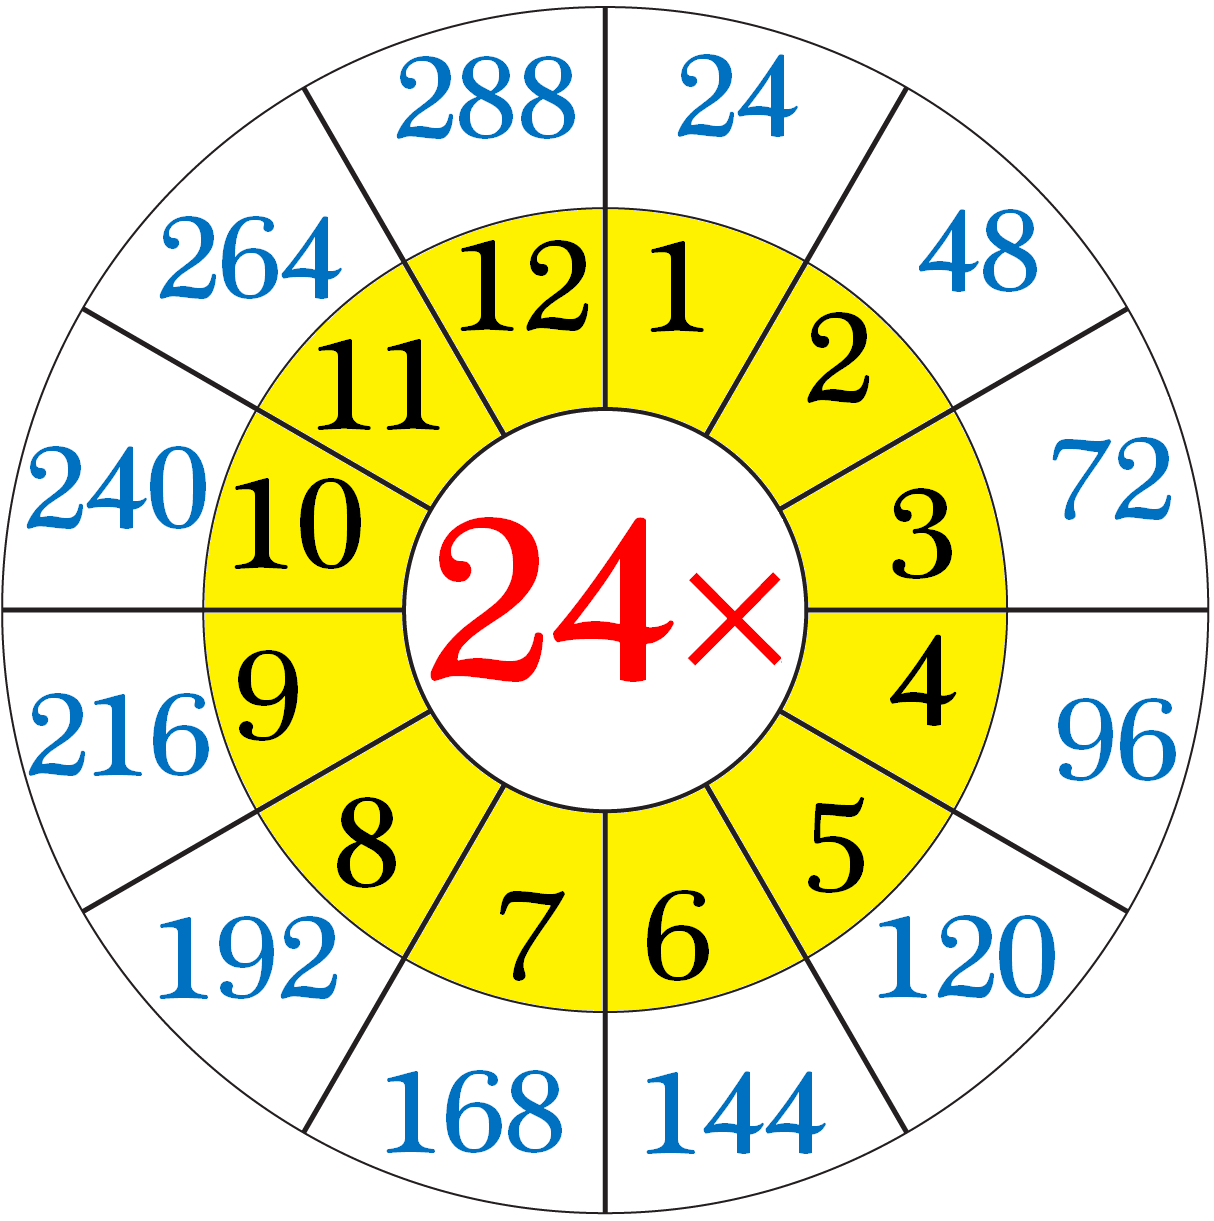 Multiplication Table of Twenty-Four